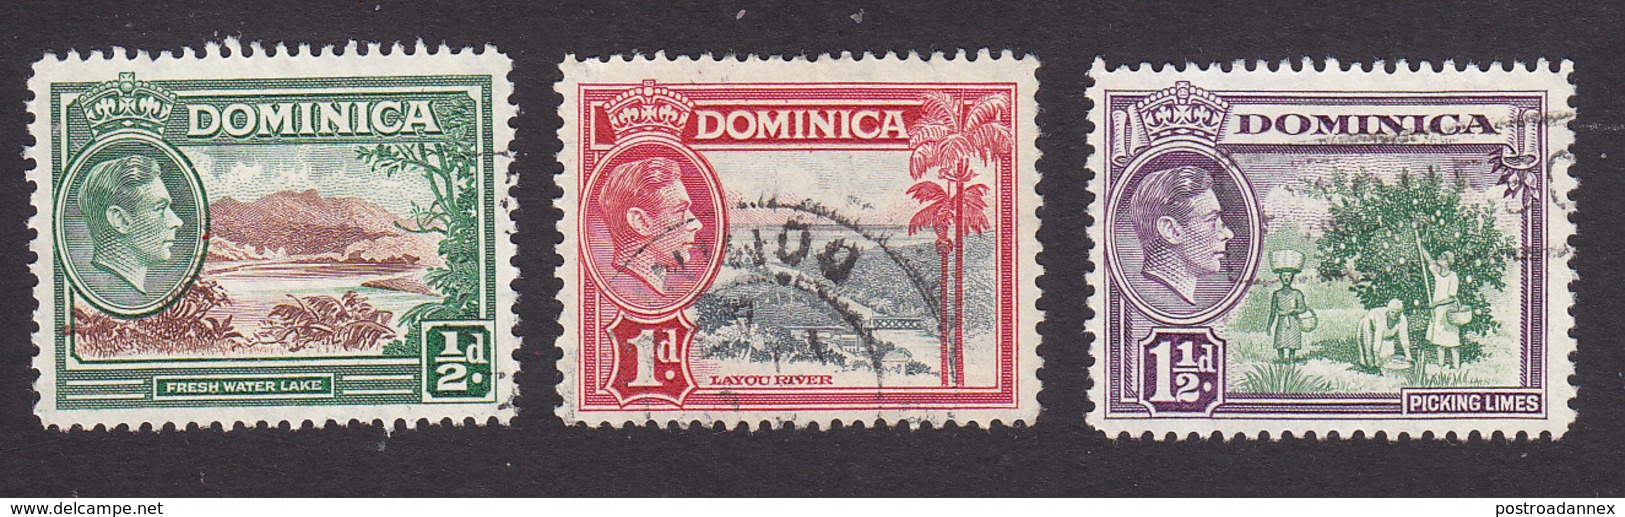 Dominica, Scott #97-99, Used, Scenes Of Dominica, Issued 1938 - Dominica (...-1978)